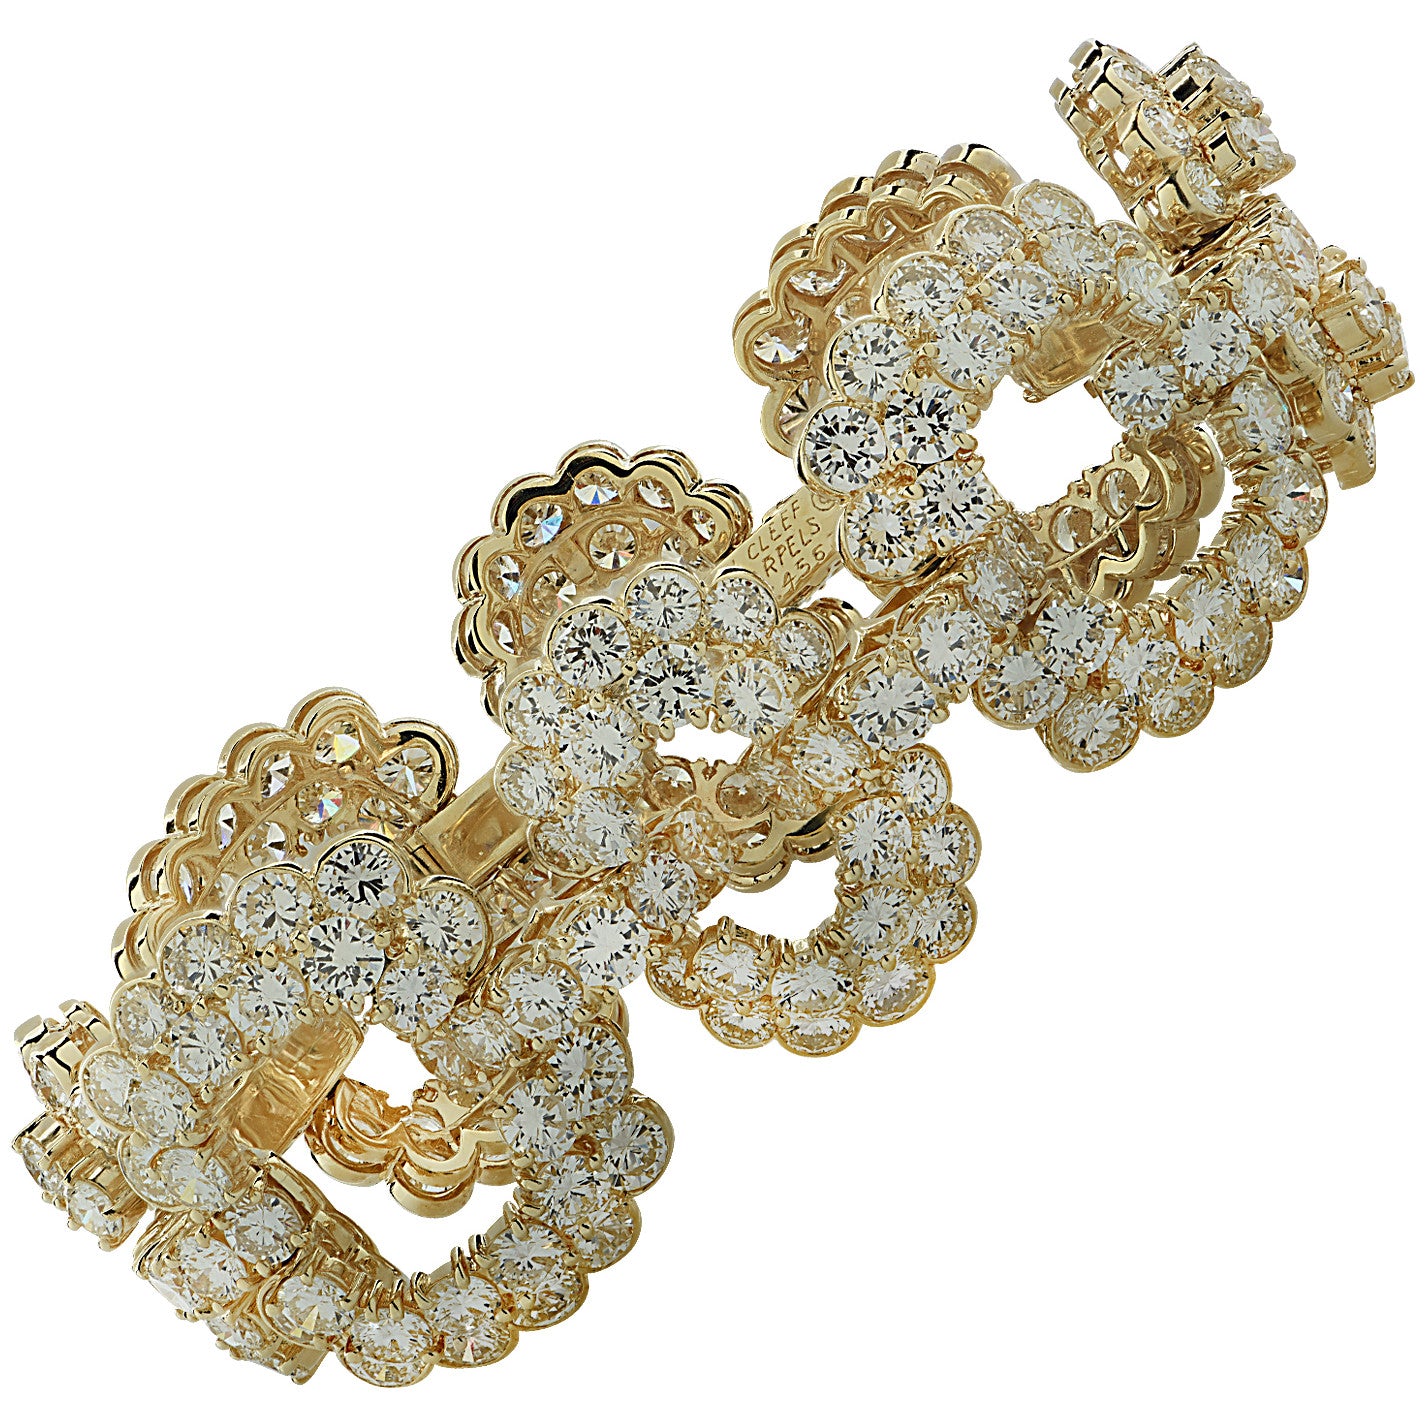 Van Cleef & Arpels 1970s 18KT Yellow Gold Diamond Bracelet close-up details and signature